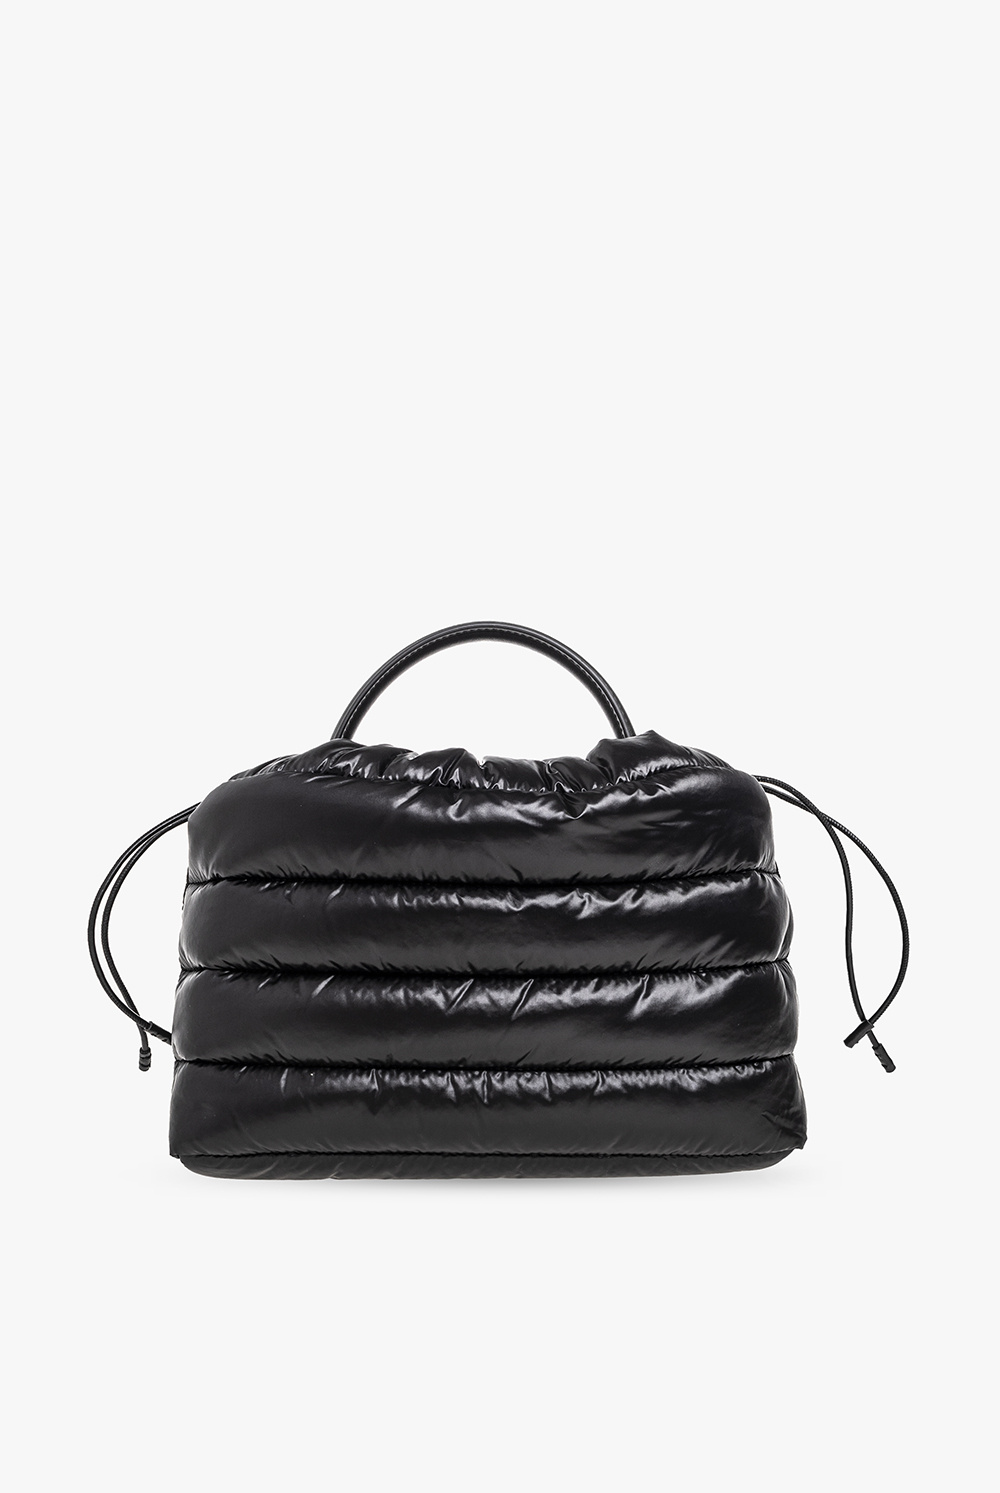 Dolce & Gabbana Double-layered shoulder bag